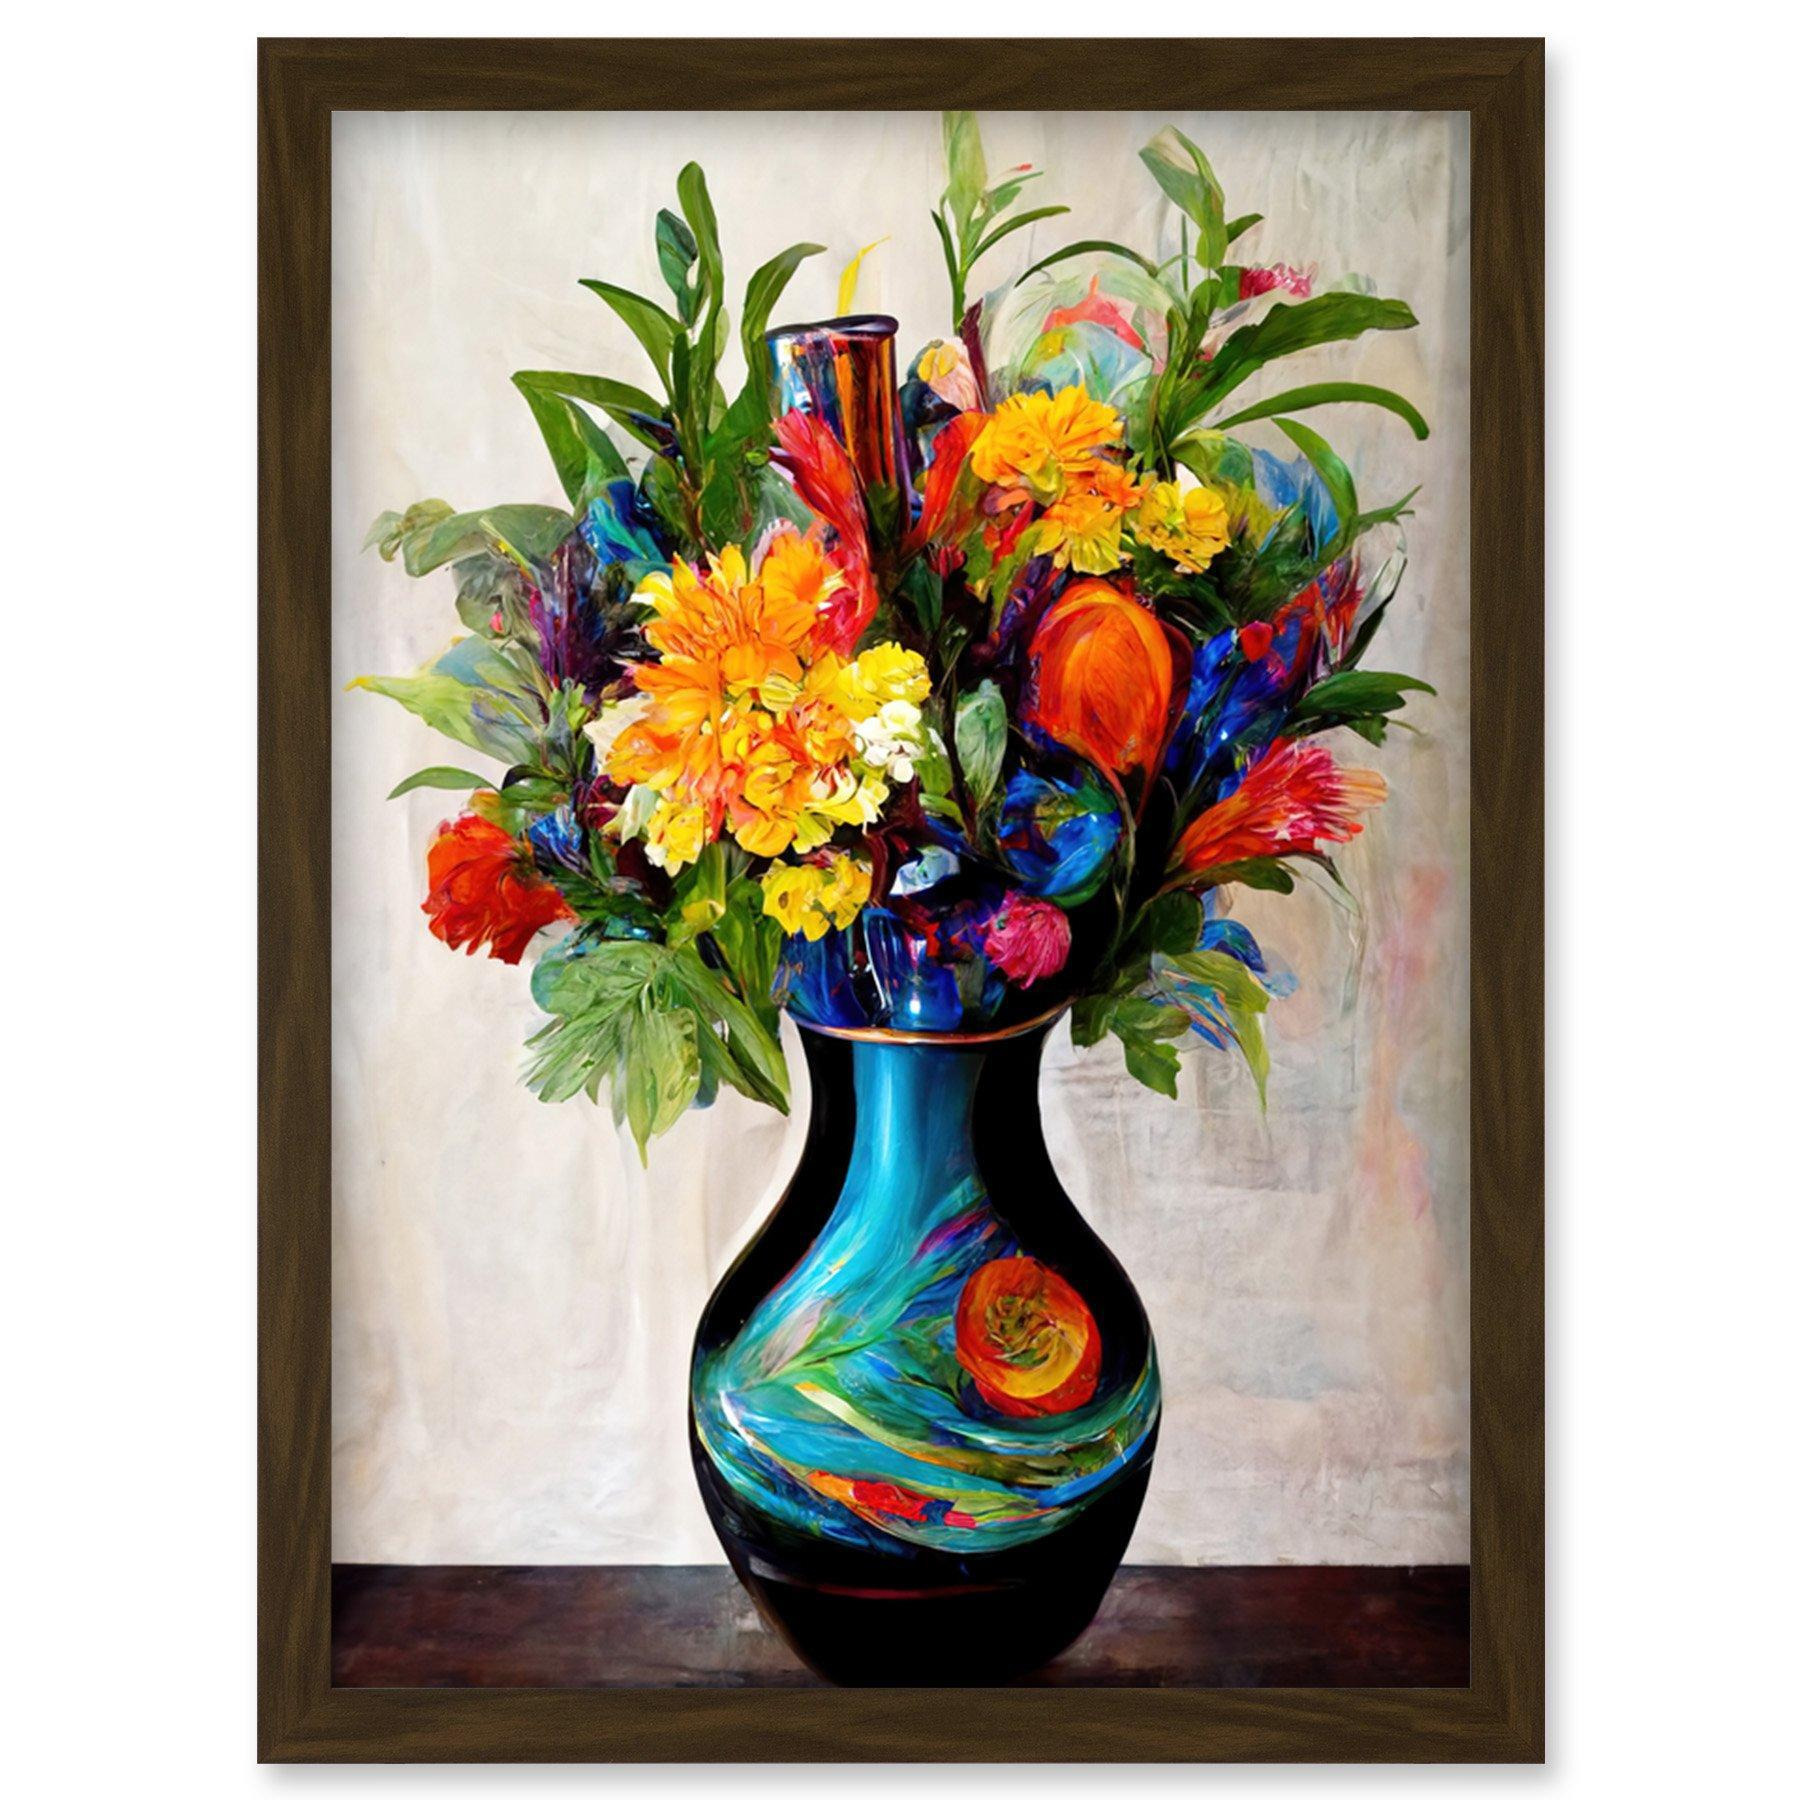 Boldly Coloured Flower Bouquet In Decorative Vase Artwork Framed Wall Art Print A4 - image 1